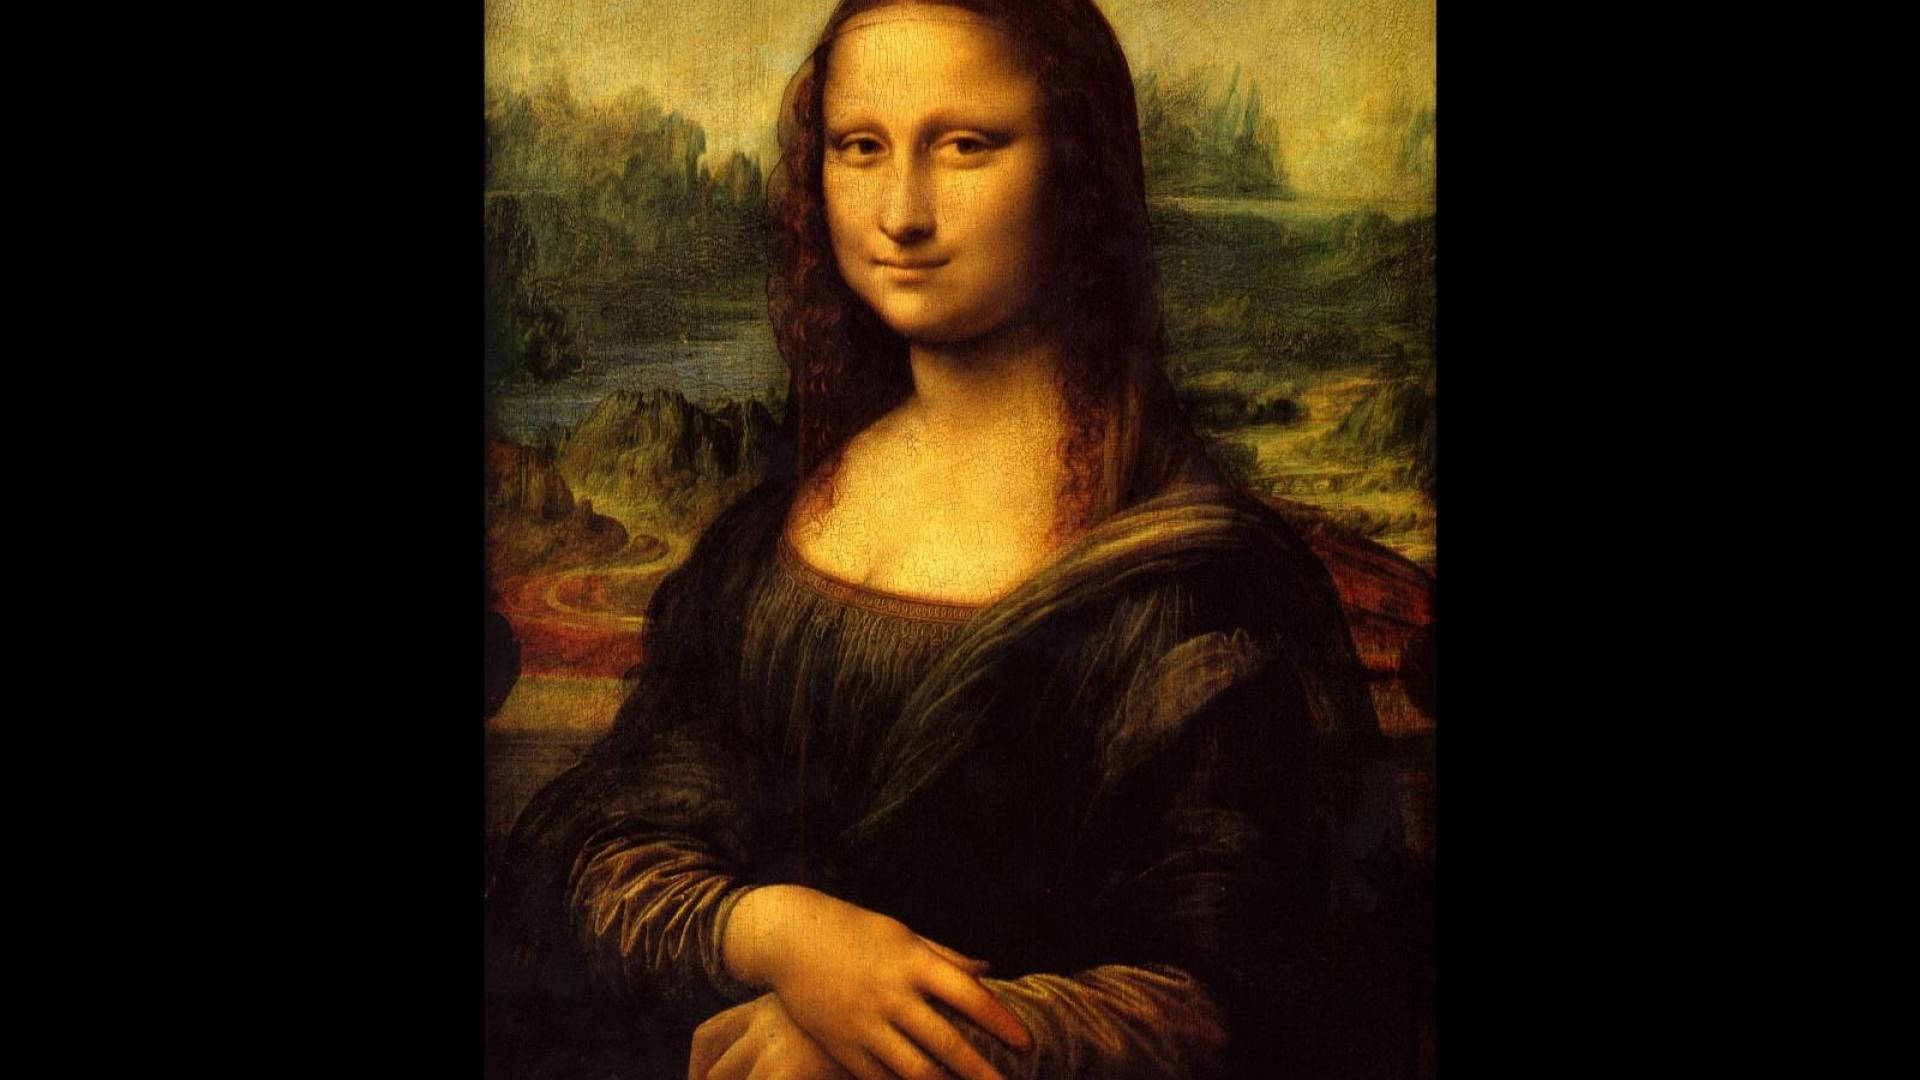 Caption: The Enigmatic Smile - Mona Lisa By Da Vinci Background